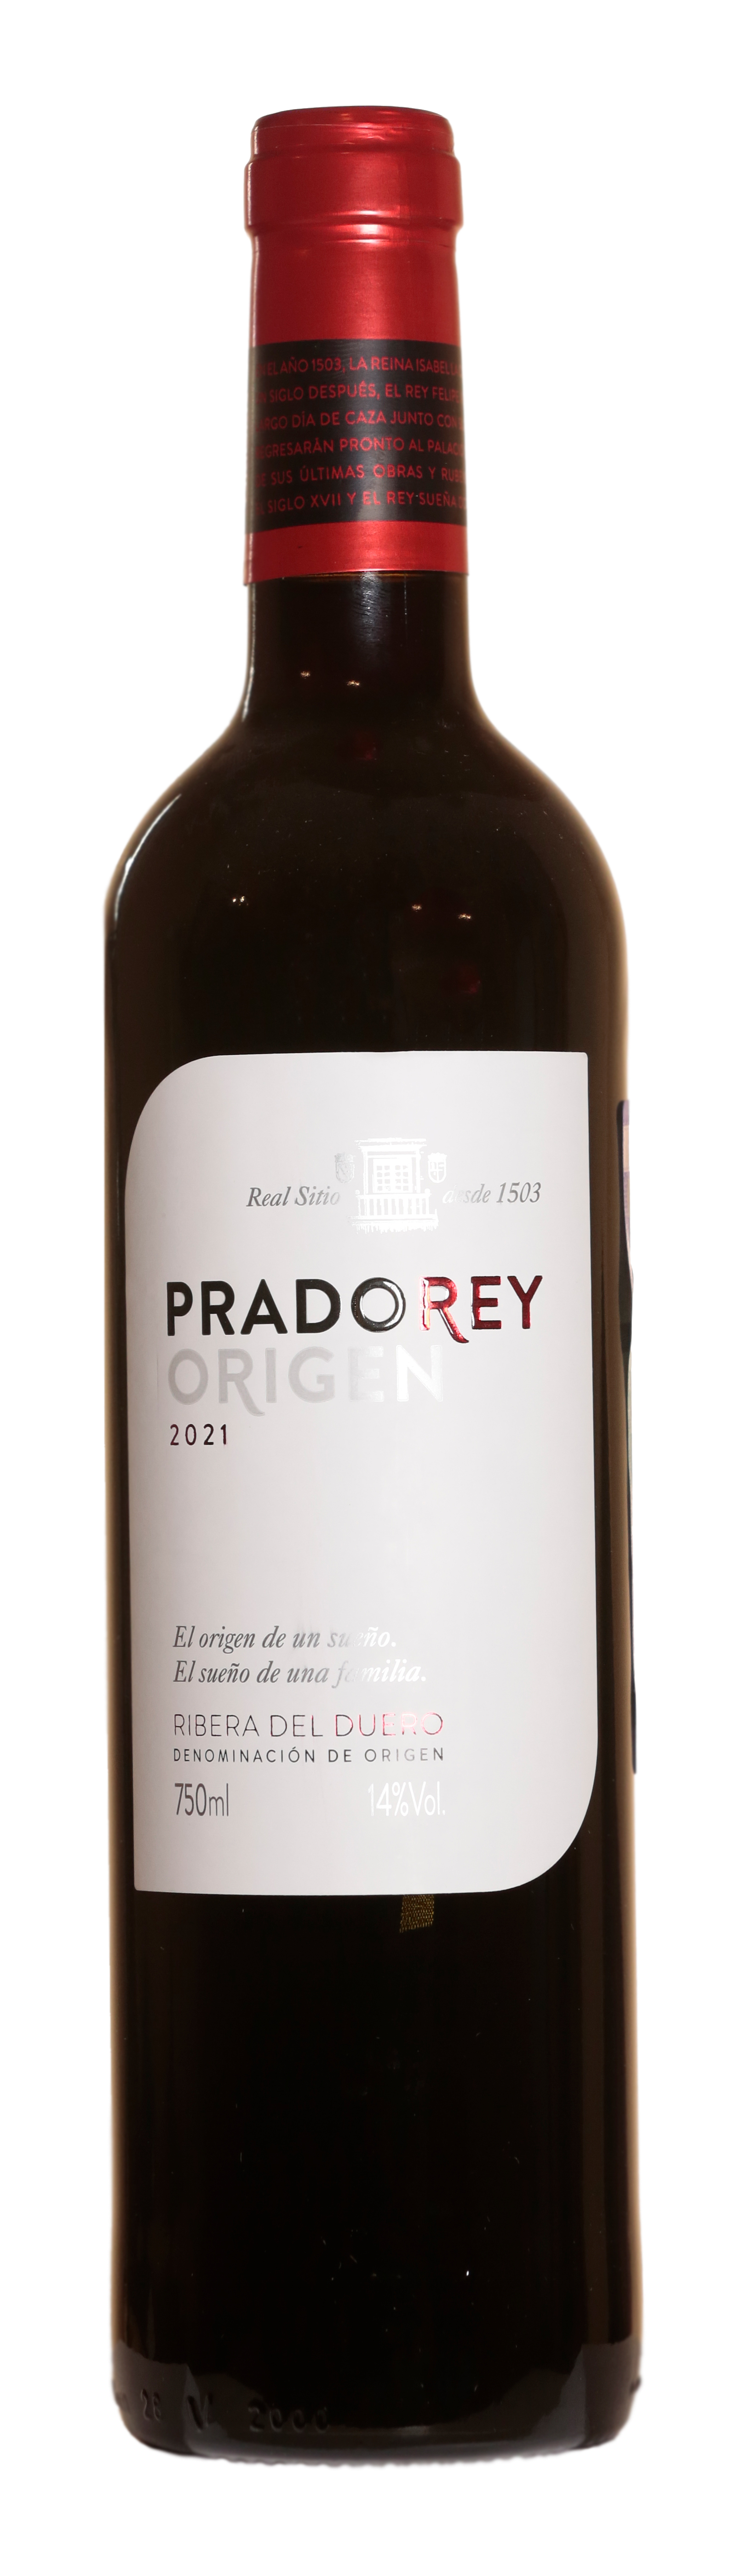 Wine PradoRey Roble Origen